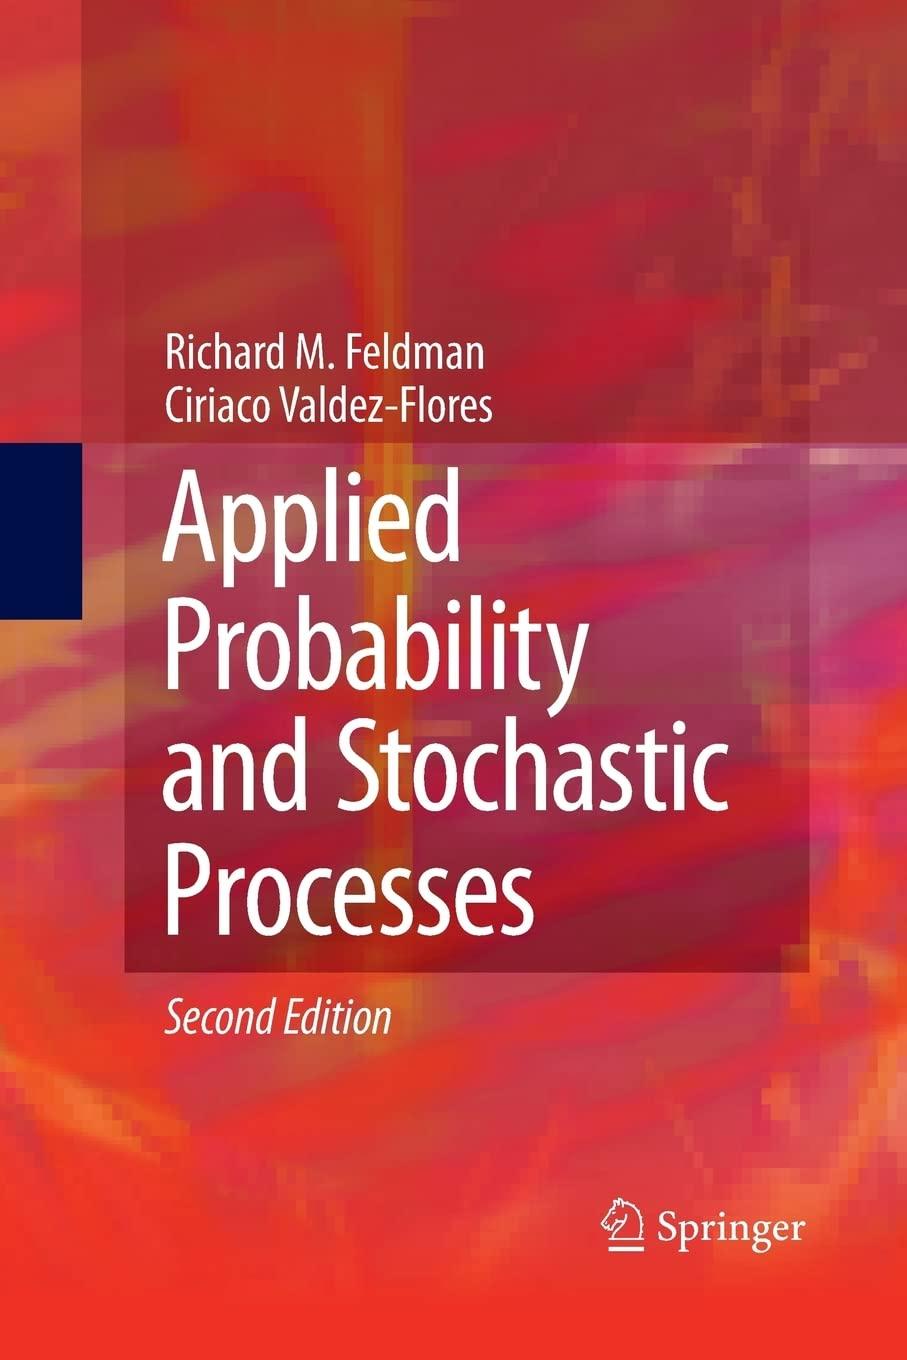 applied probability and stochastic processes 2nd edition richard m. feldman, ciriaco valdez-flores